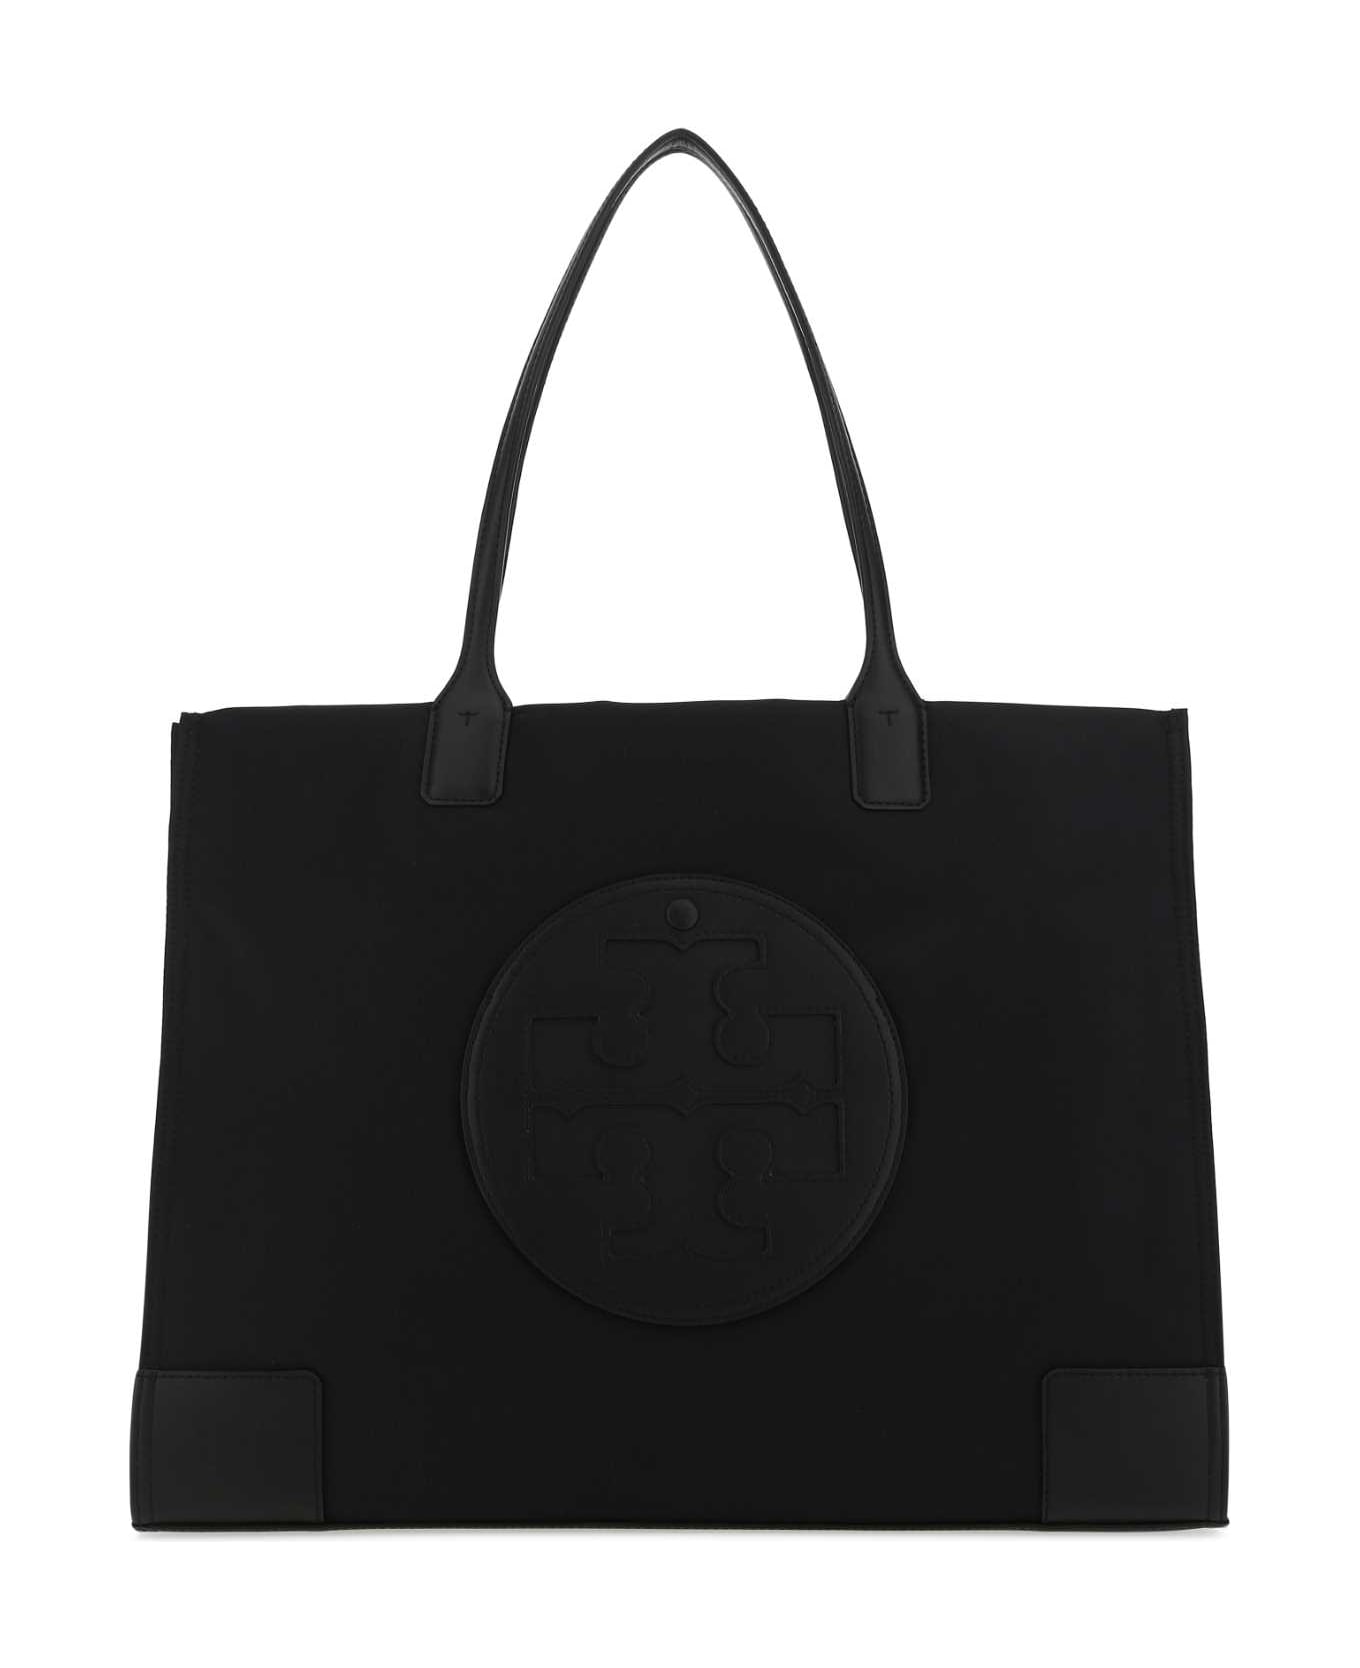 Tory Burch Black Nylon Ella Shopping Bag - 001